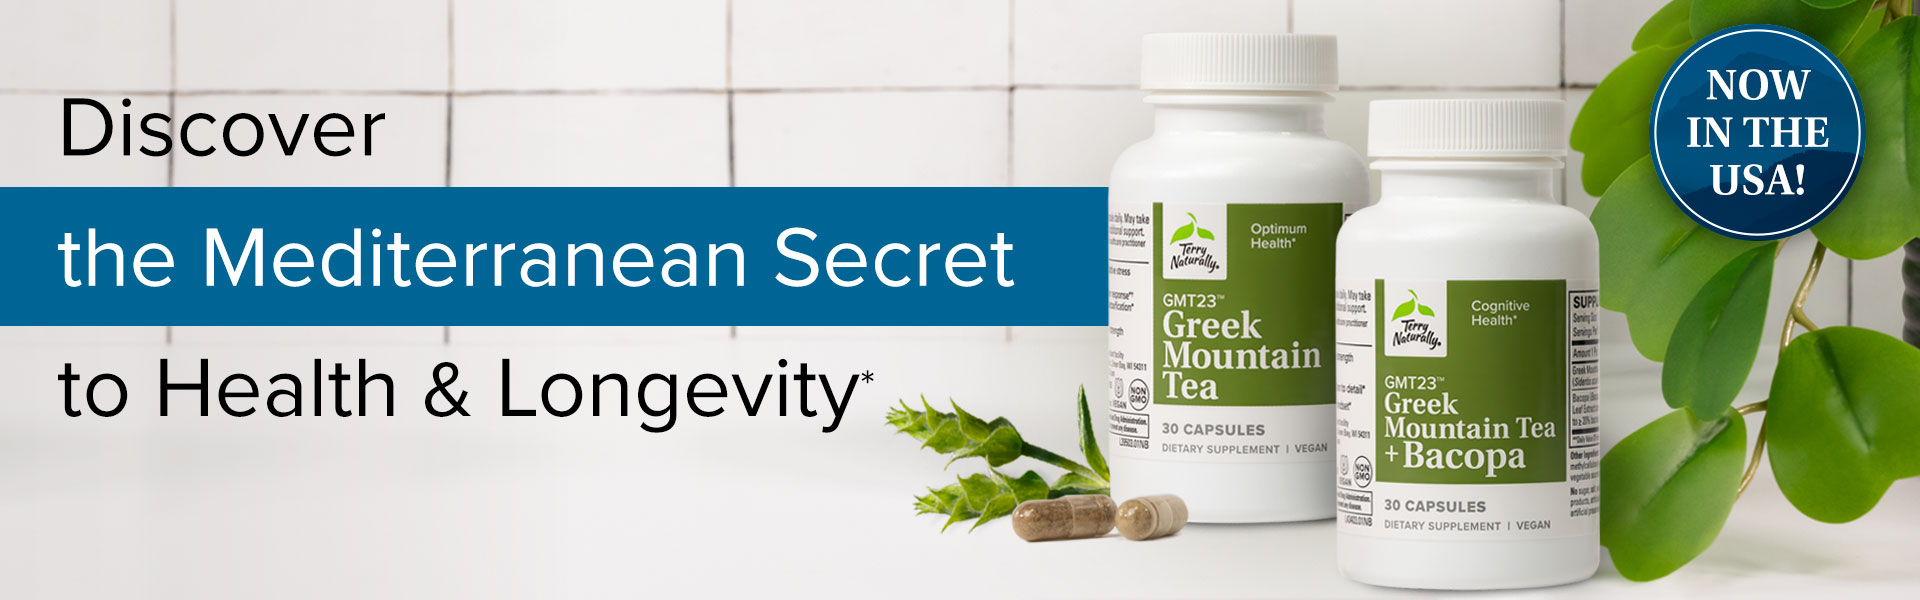 Discover the Mediterranean Secret to Health & Longevity*